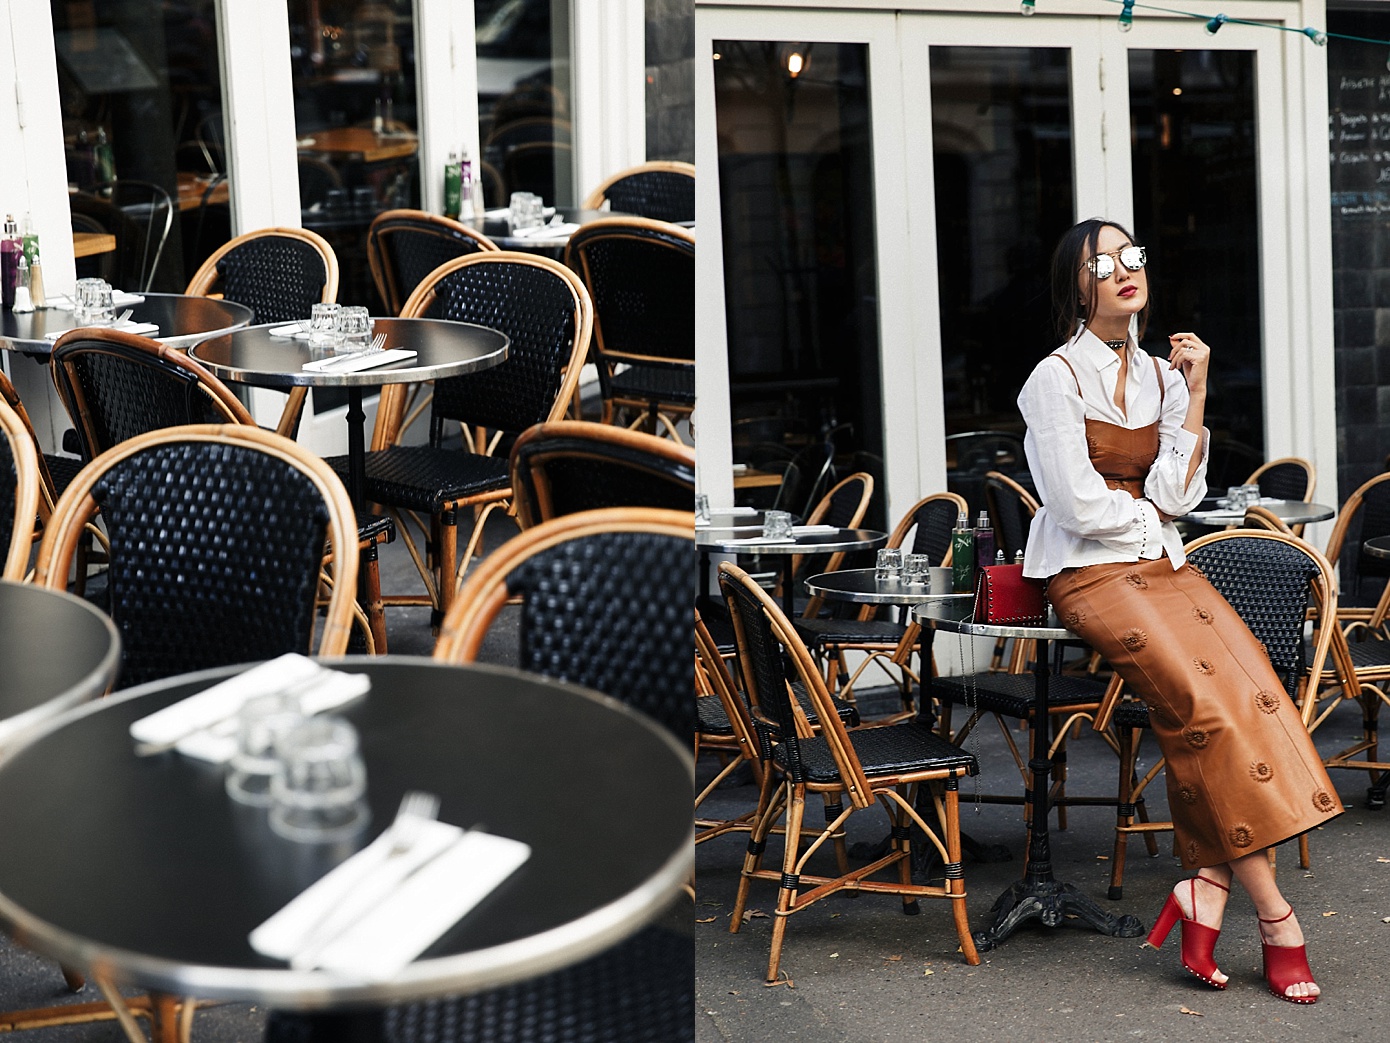 Paris Cafe Chriselle Lim wearing valentino